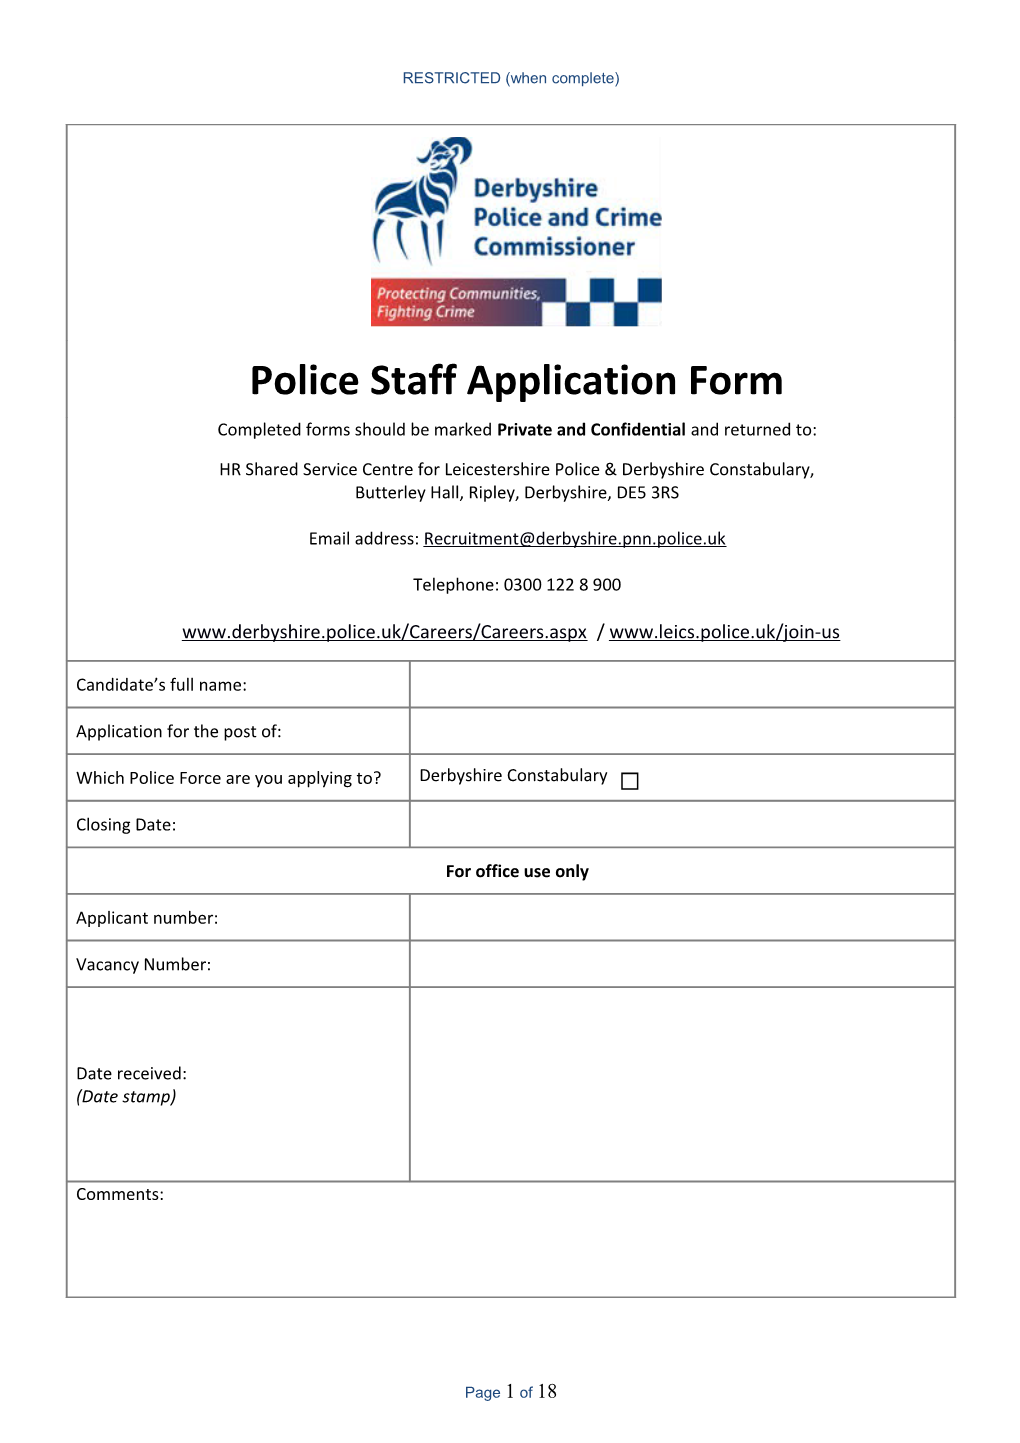 OPCC Police Staff Application Form - Derby's